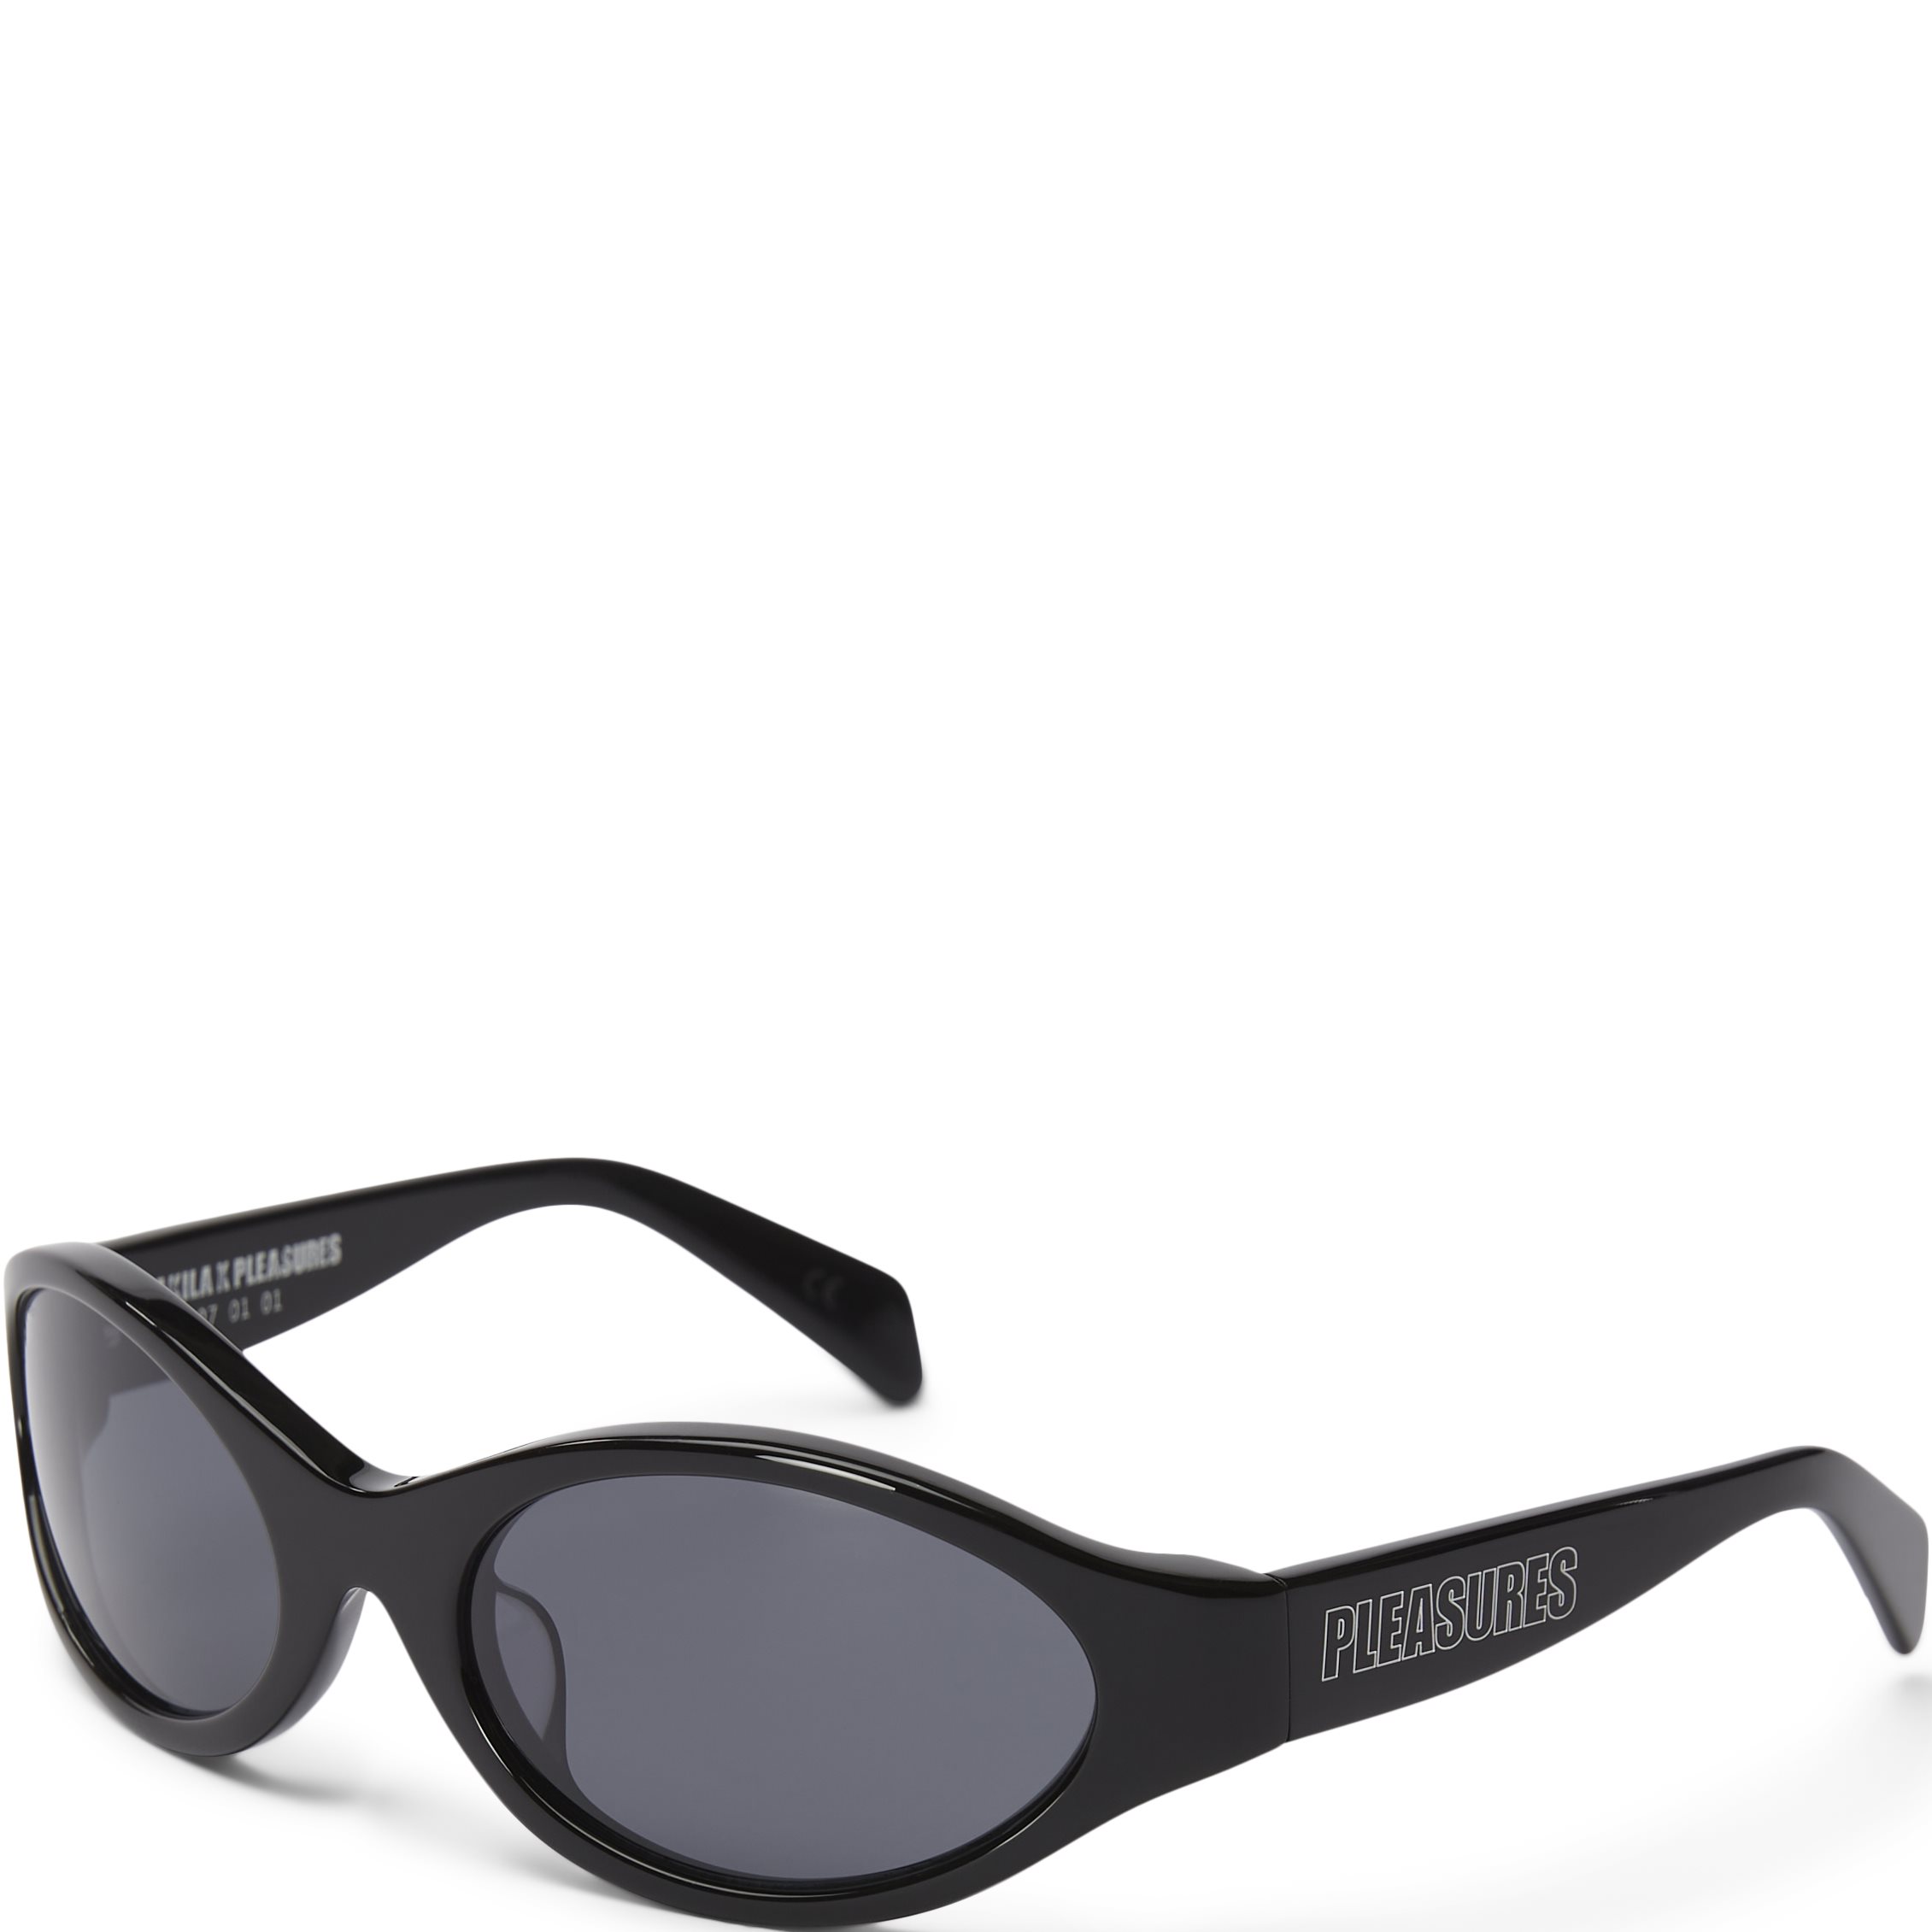 Reflex Sunglasses - Accessories - Sort